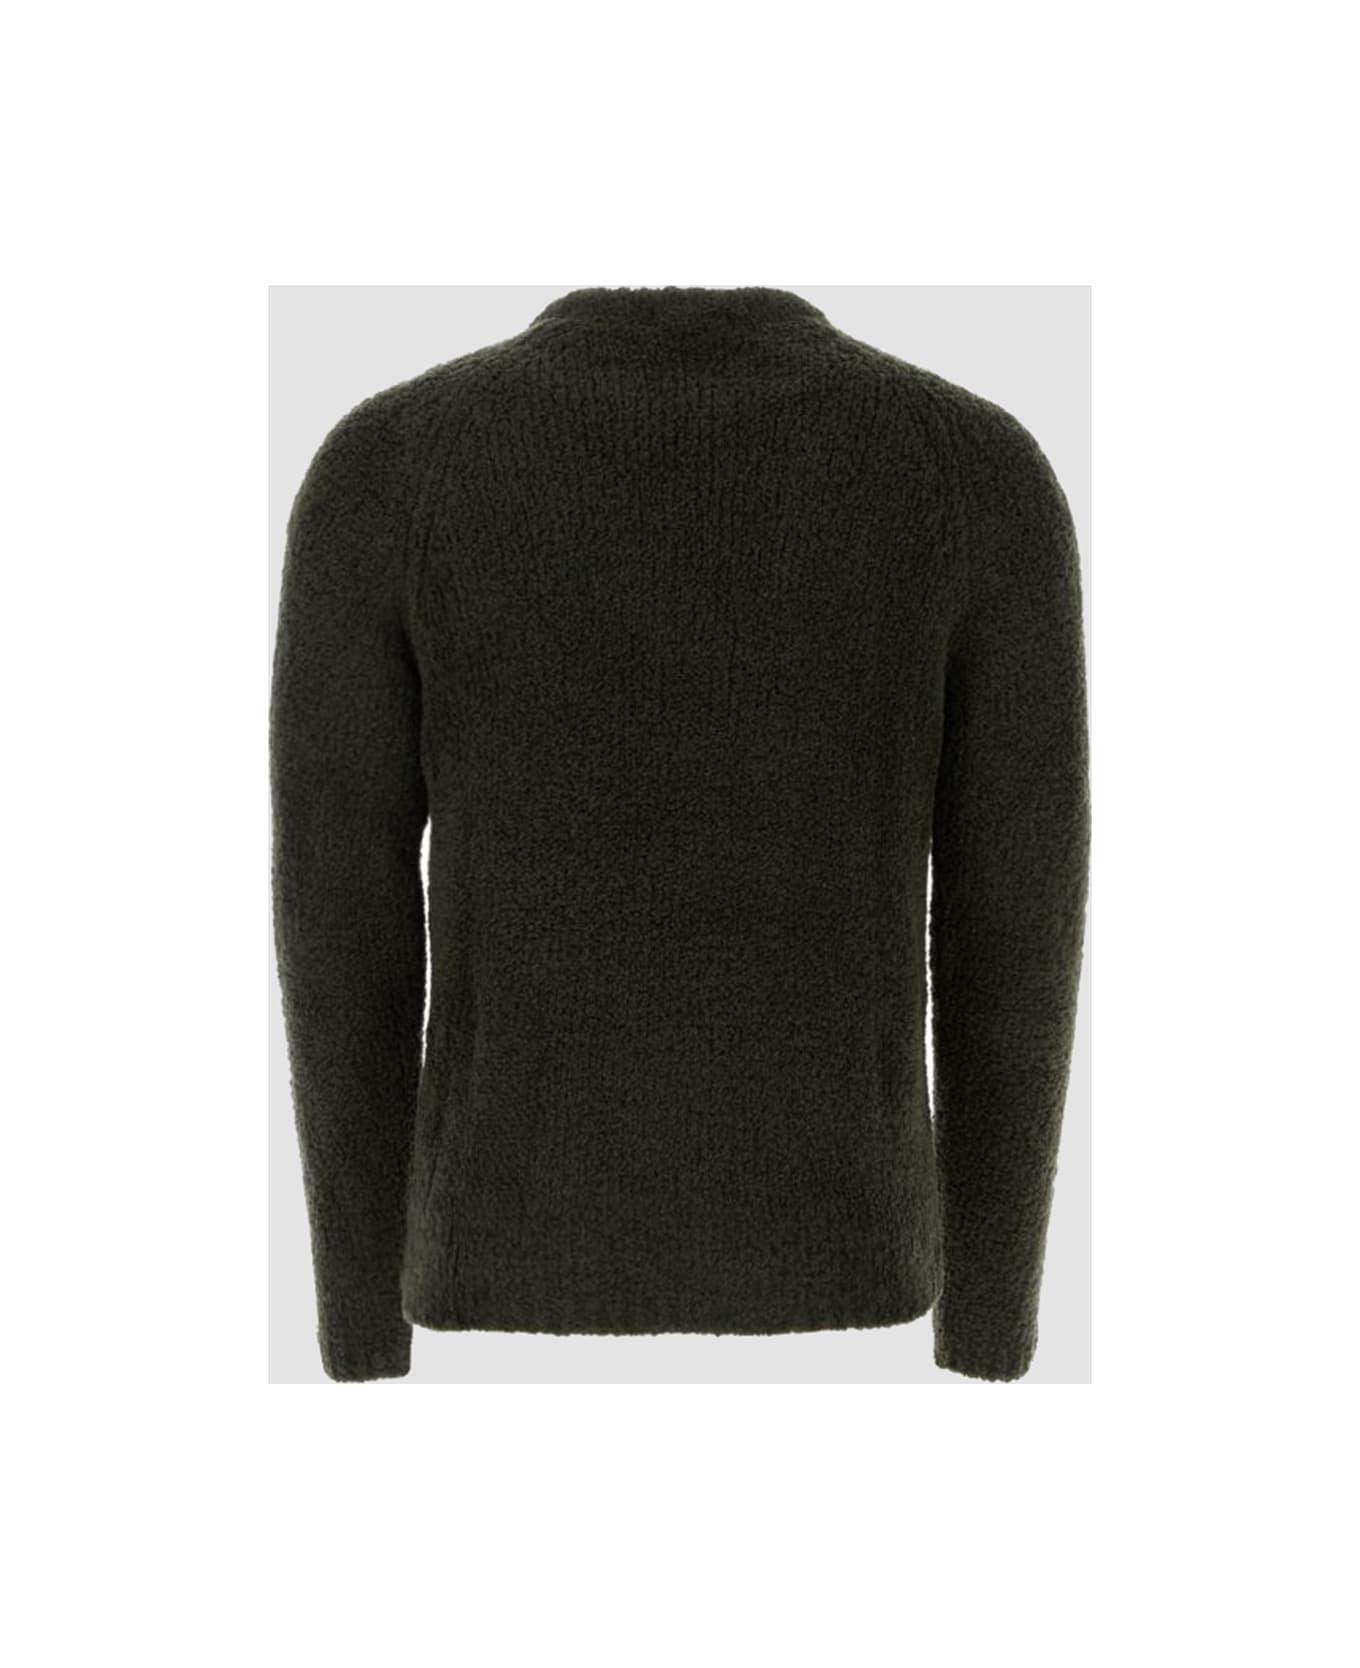 Ten C Dark Green Wool Blend Sweater - Green ニットウェア